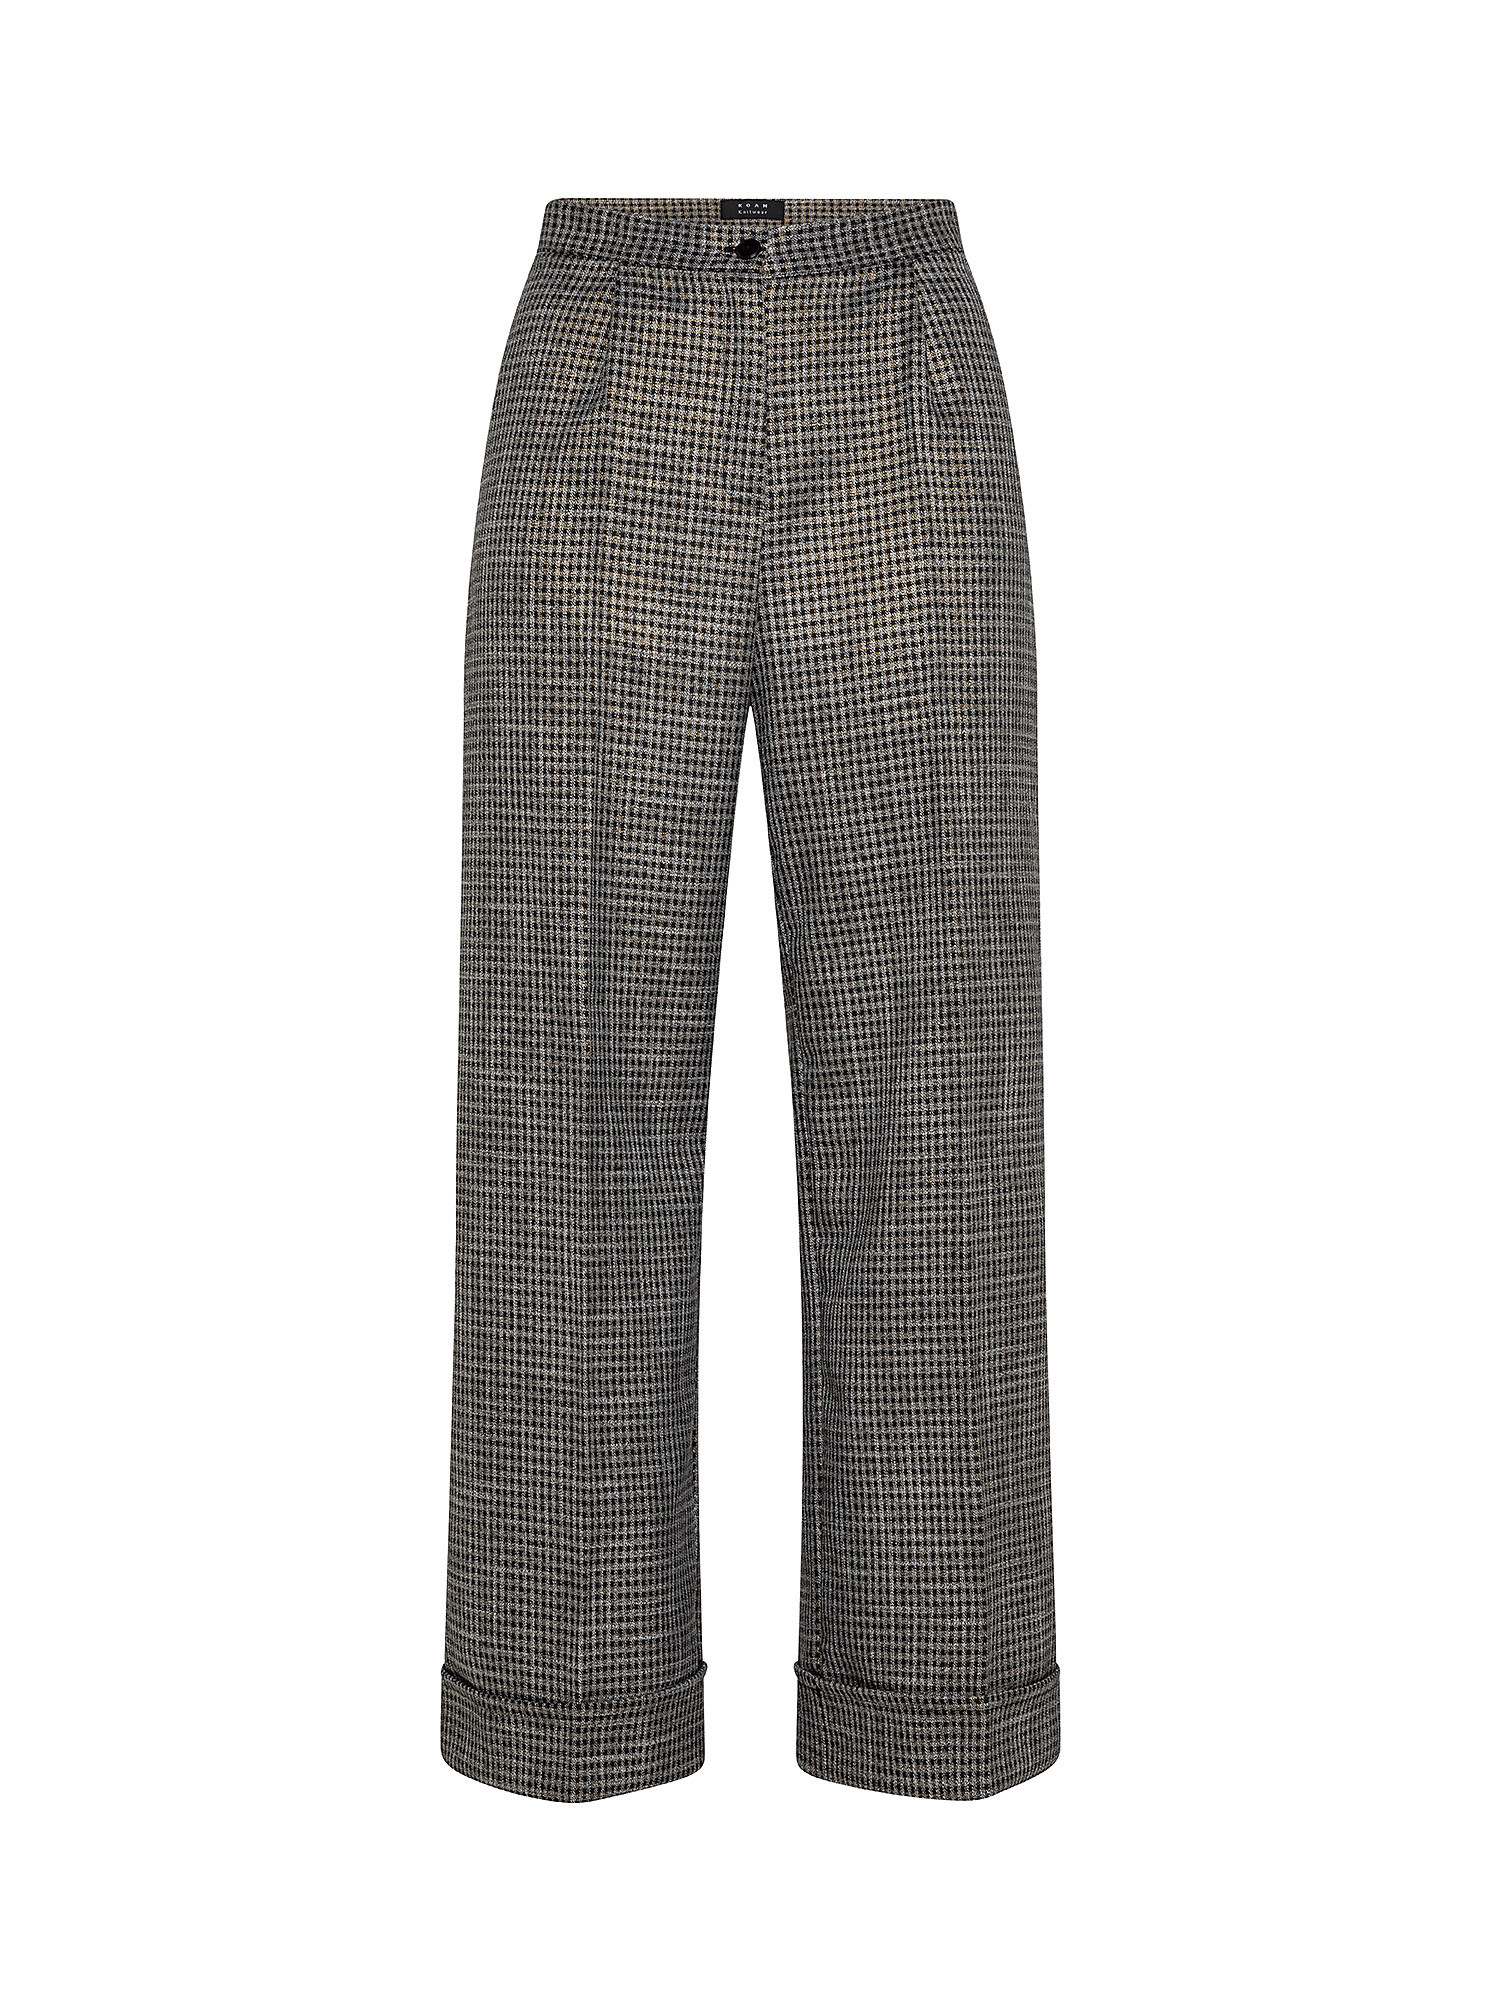 Pantaloni in lurex, Grigio, large image number 0